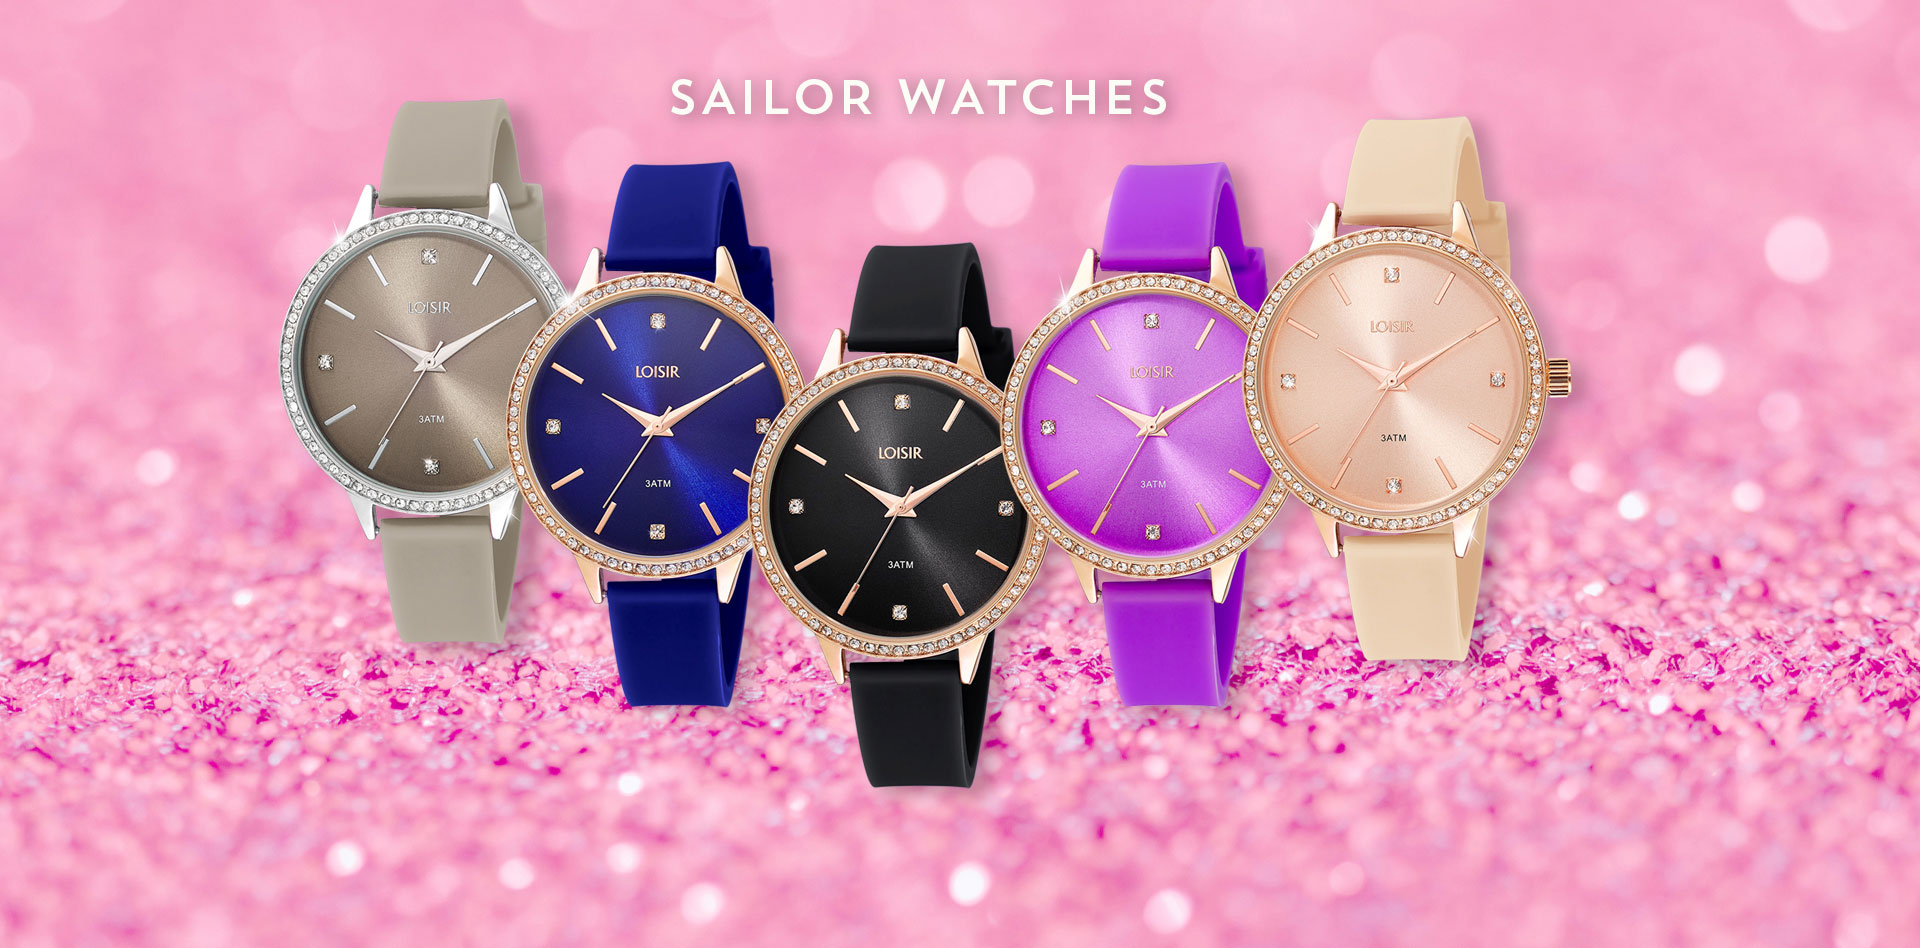 Loisir Sailor Watches